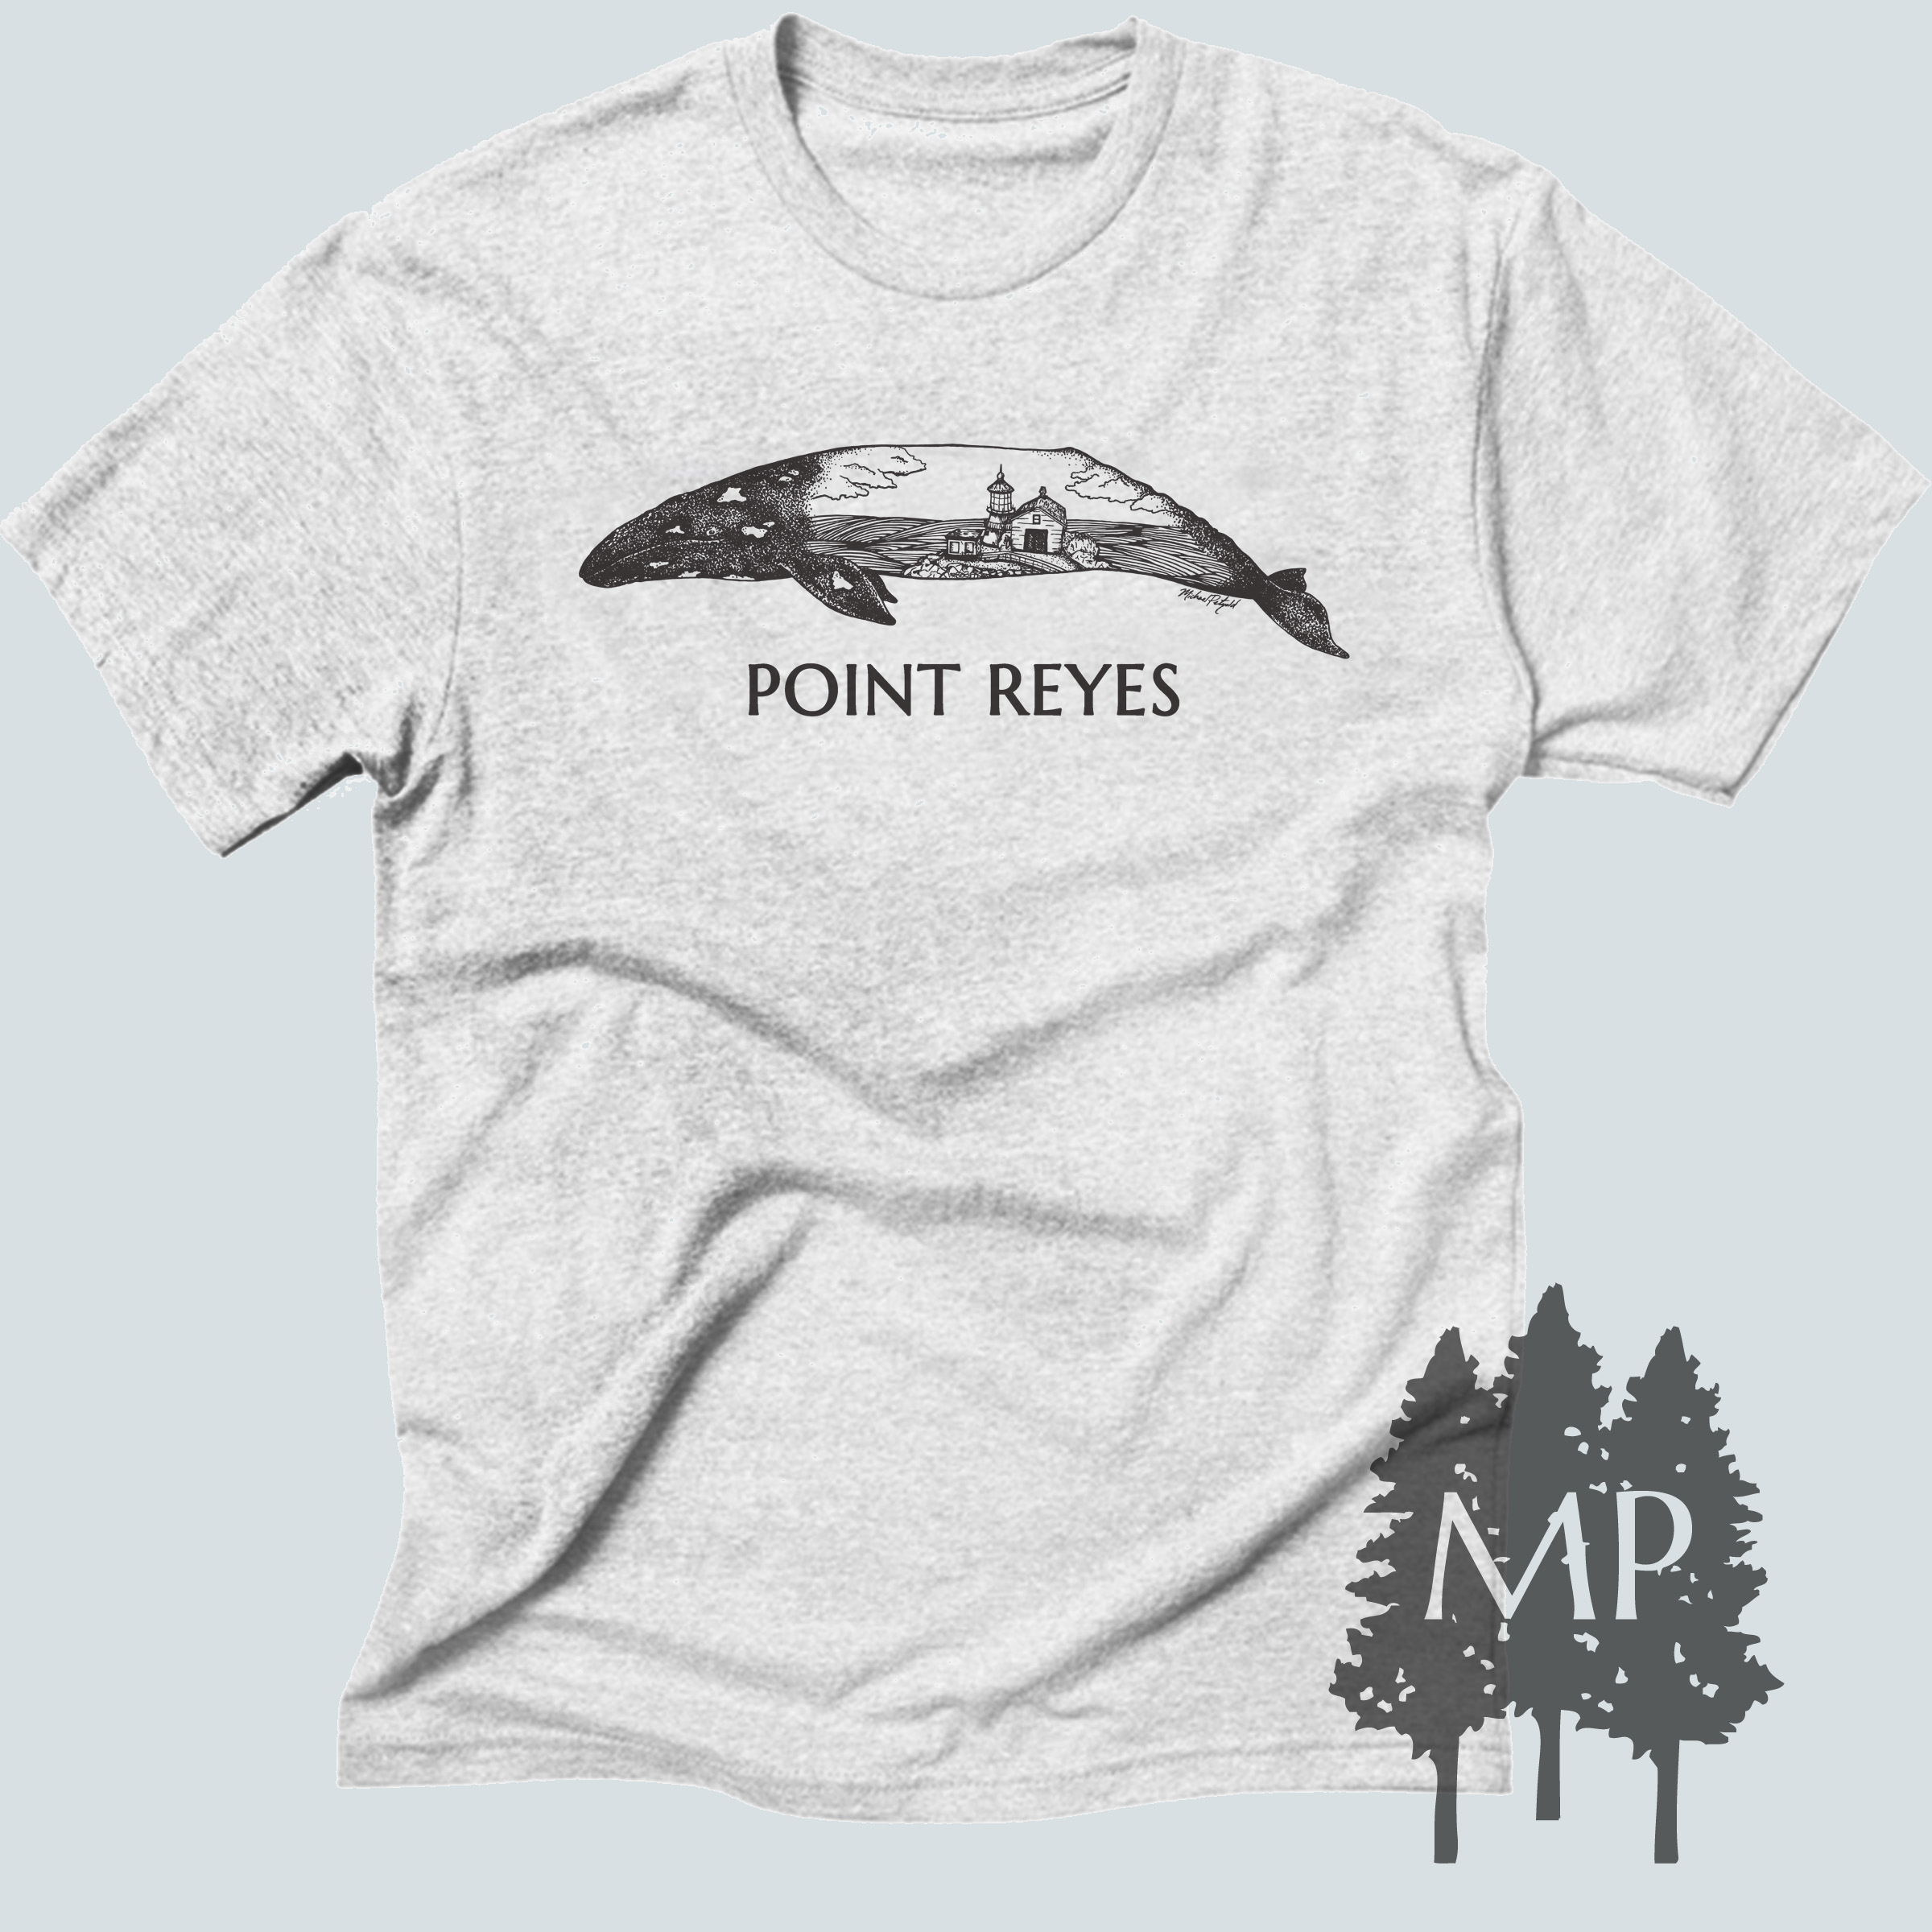 PointReyes Shirt Ad.jpg